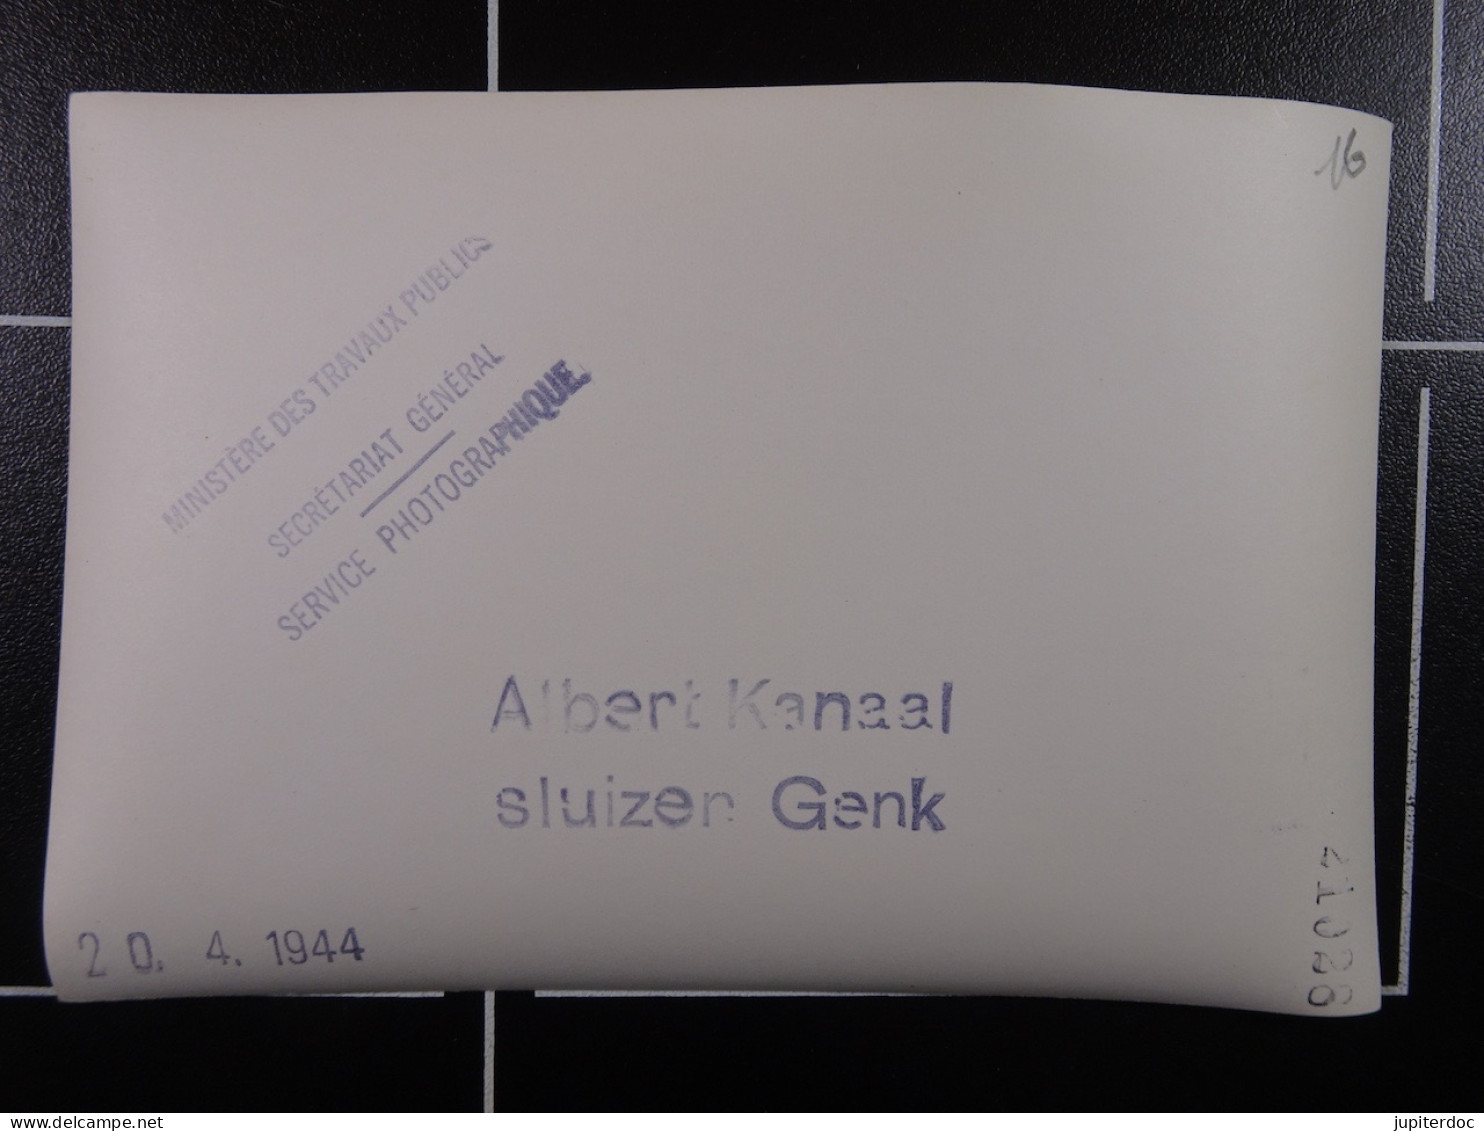 Min.Trav.Pub. Albert Kanaal Sluizen Genk 20-04-1944  /16/ - Diplome Und Schulzeugnisse